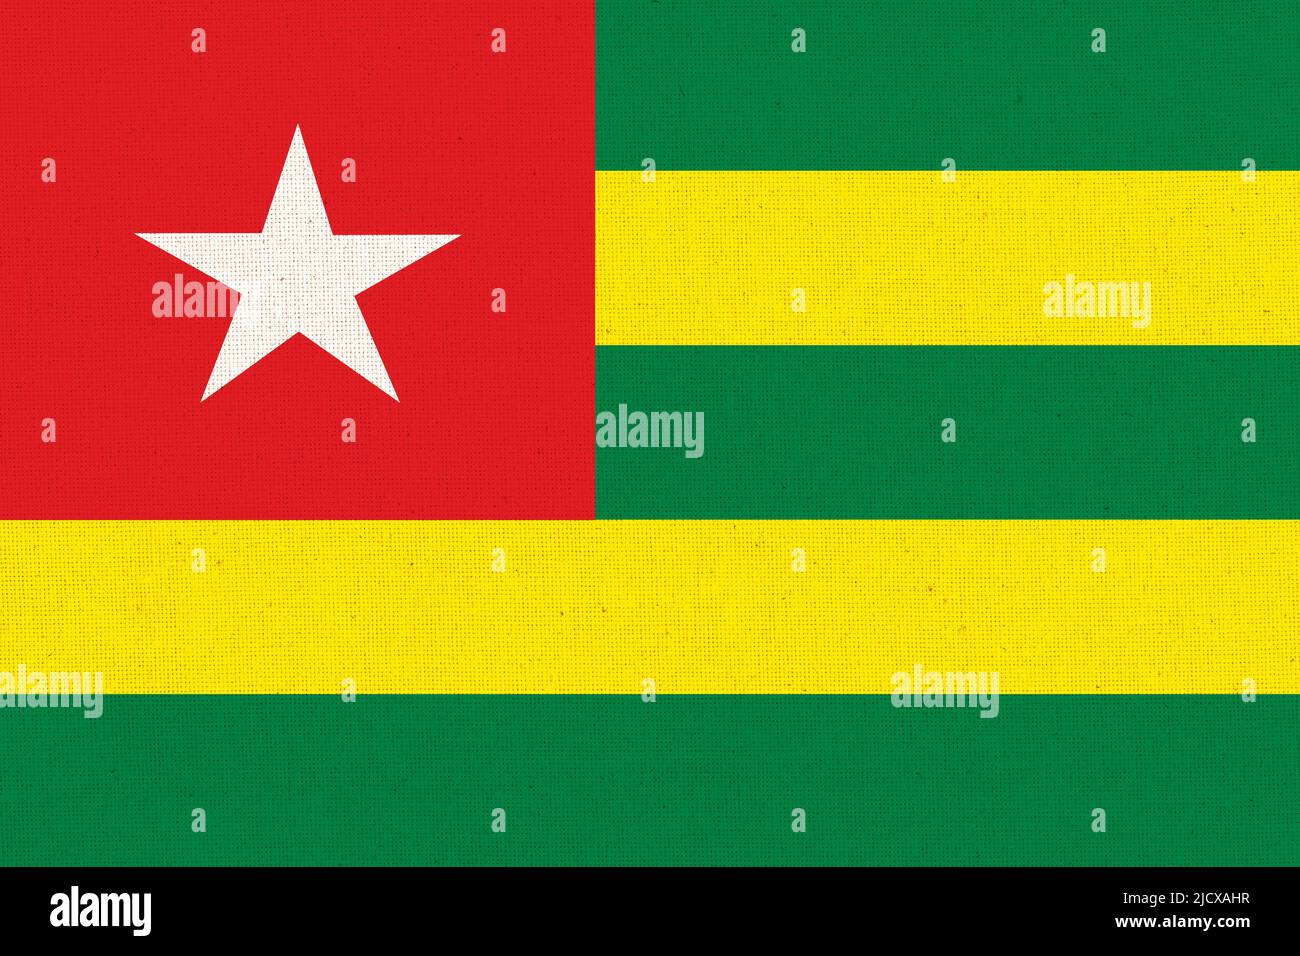 Flag of Togo. Tongolese flag on fabric surface. Fabric texture. National symbol of Togo on patterned background. Togolese Republic Stock Photo